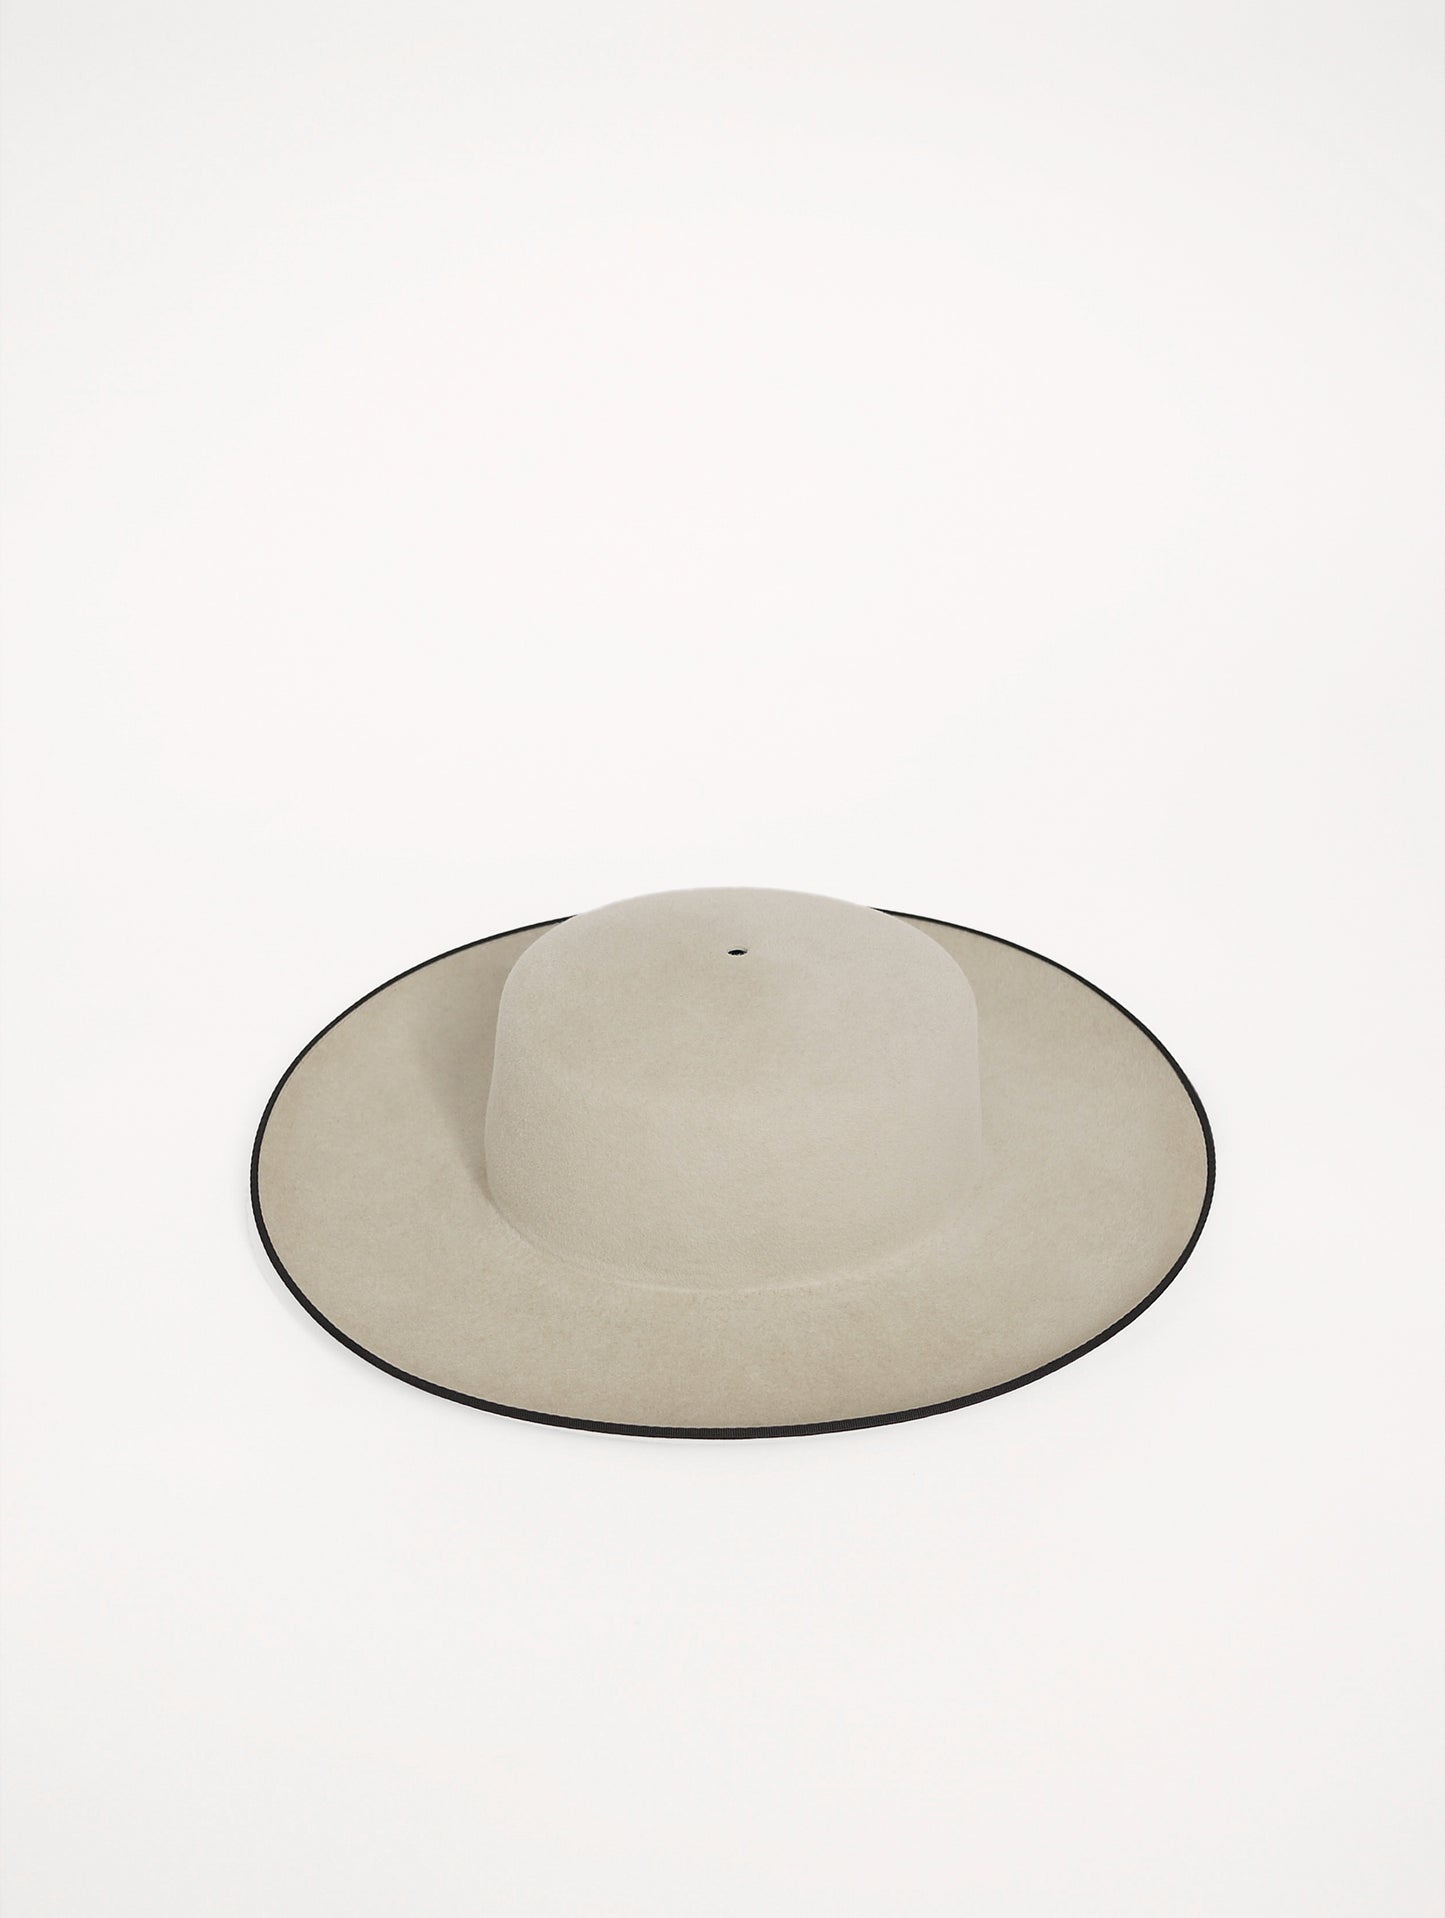 White Hat with black edge